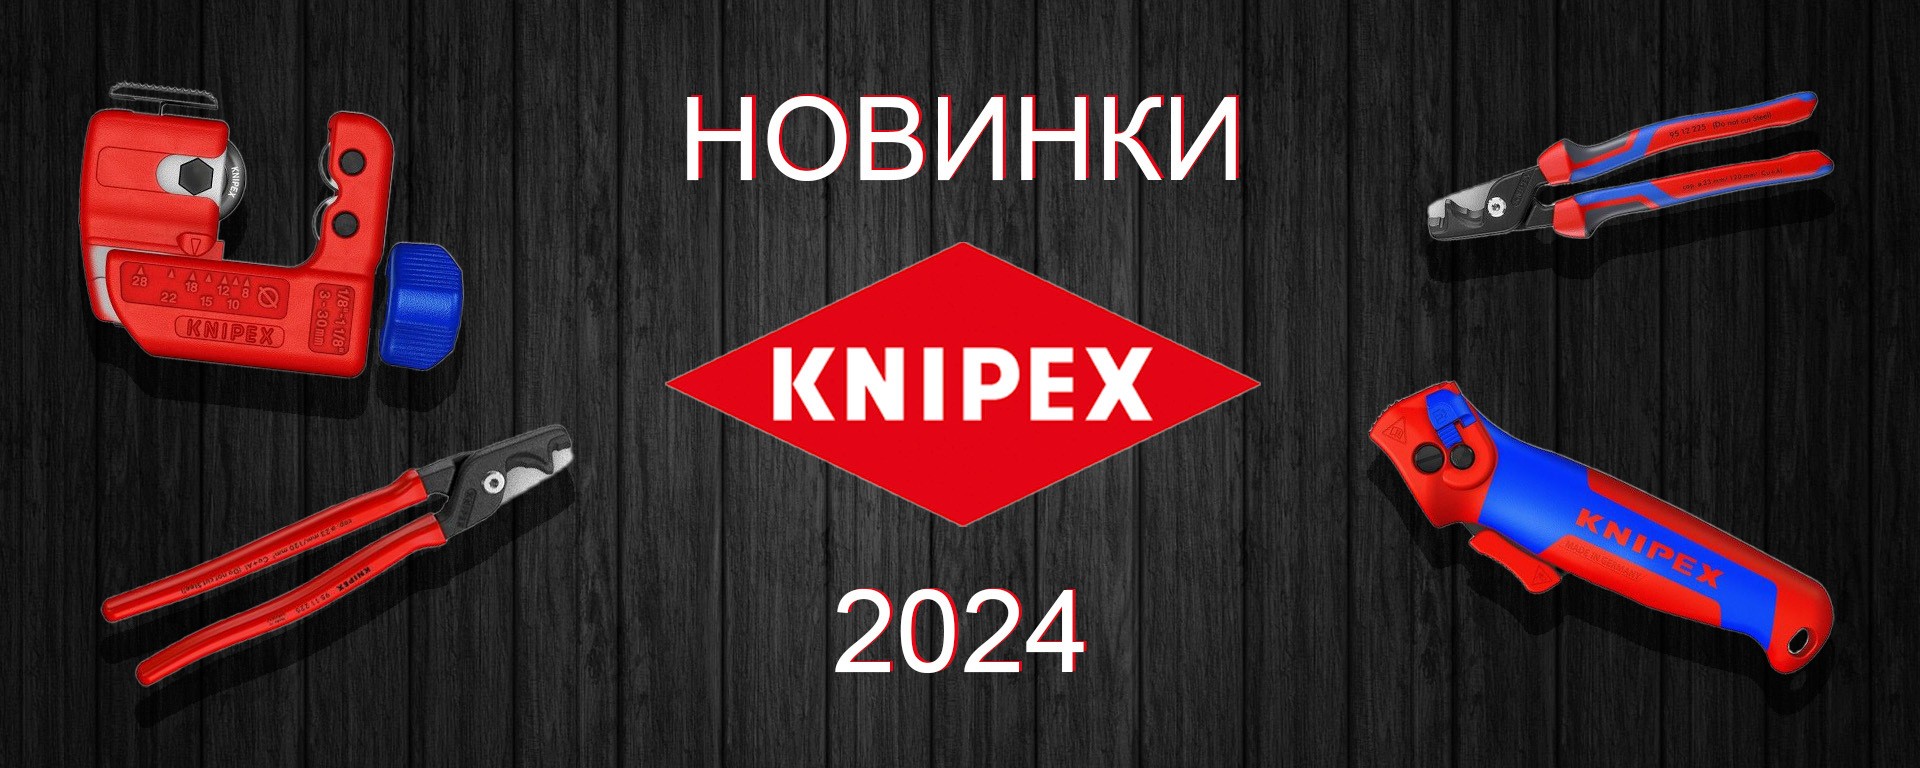 НОВИНКИ 2024 KNIPEX